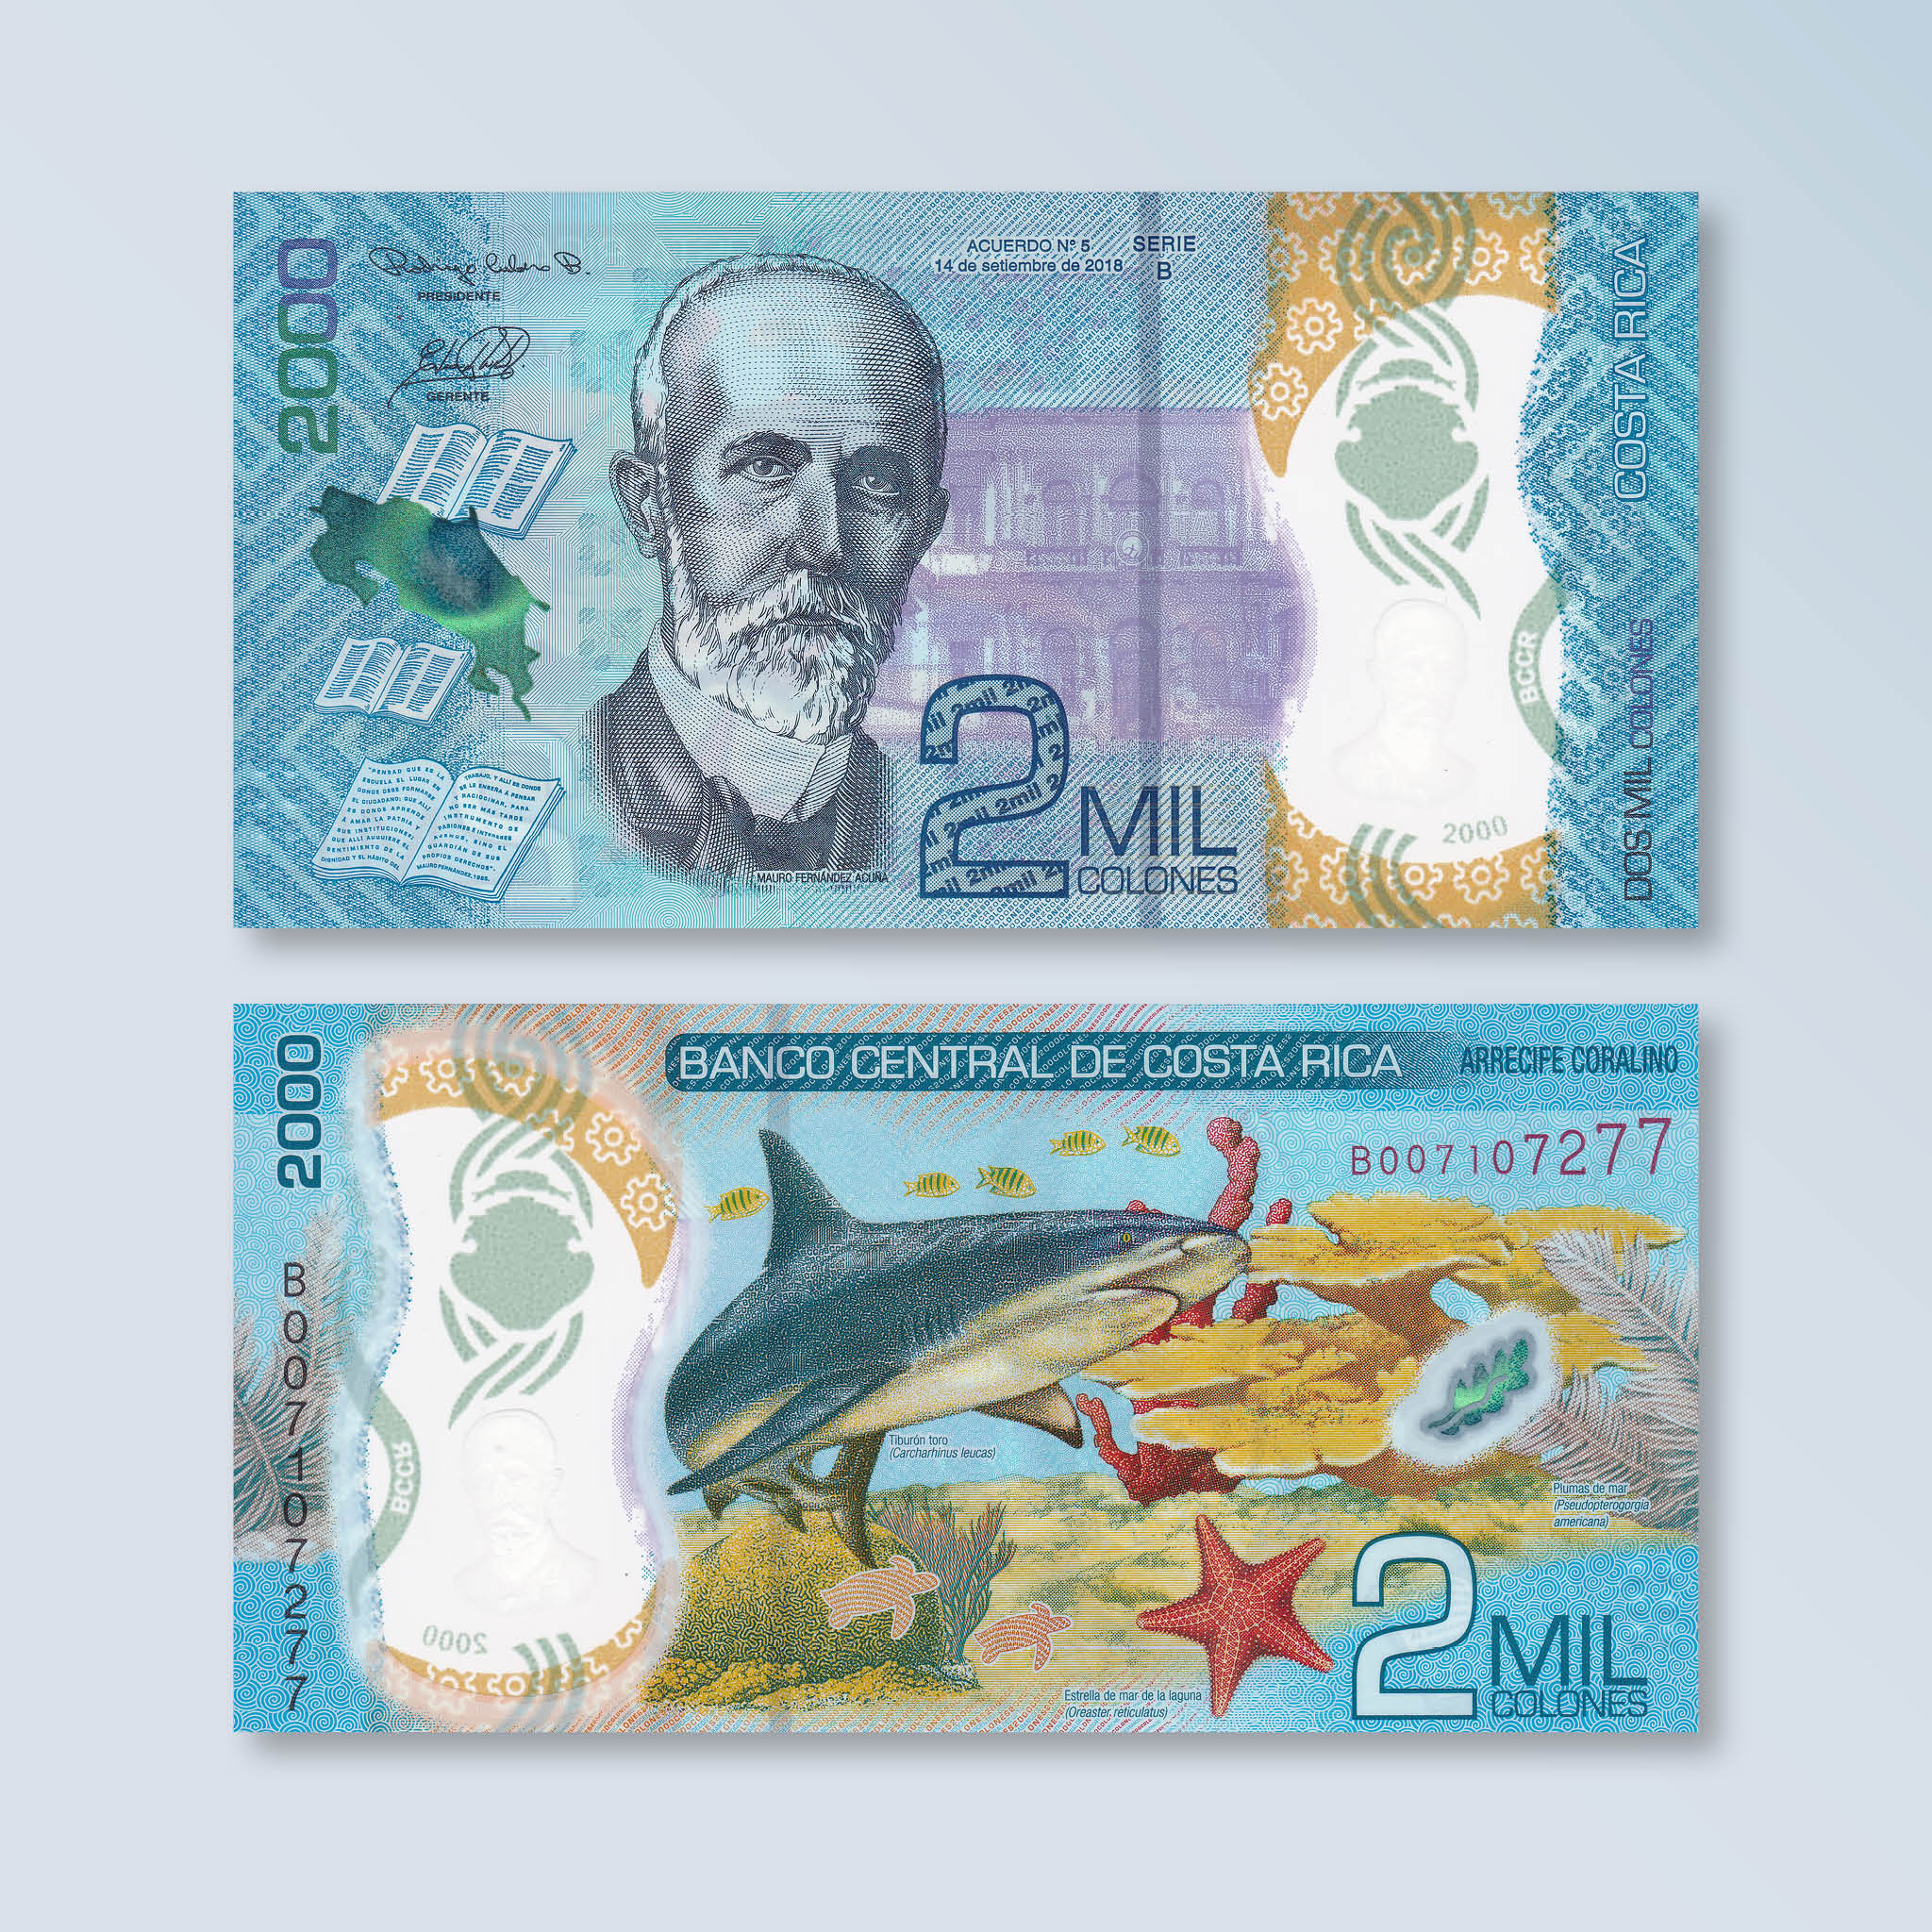 Costa Rica 2000 Colones, 2018 (2020), B565a, UNC - Robert's World Money - World Banknotes